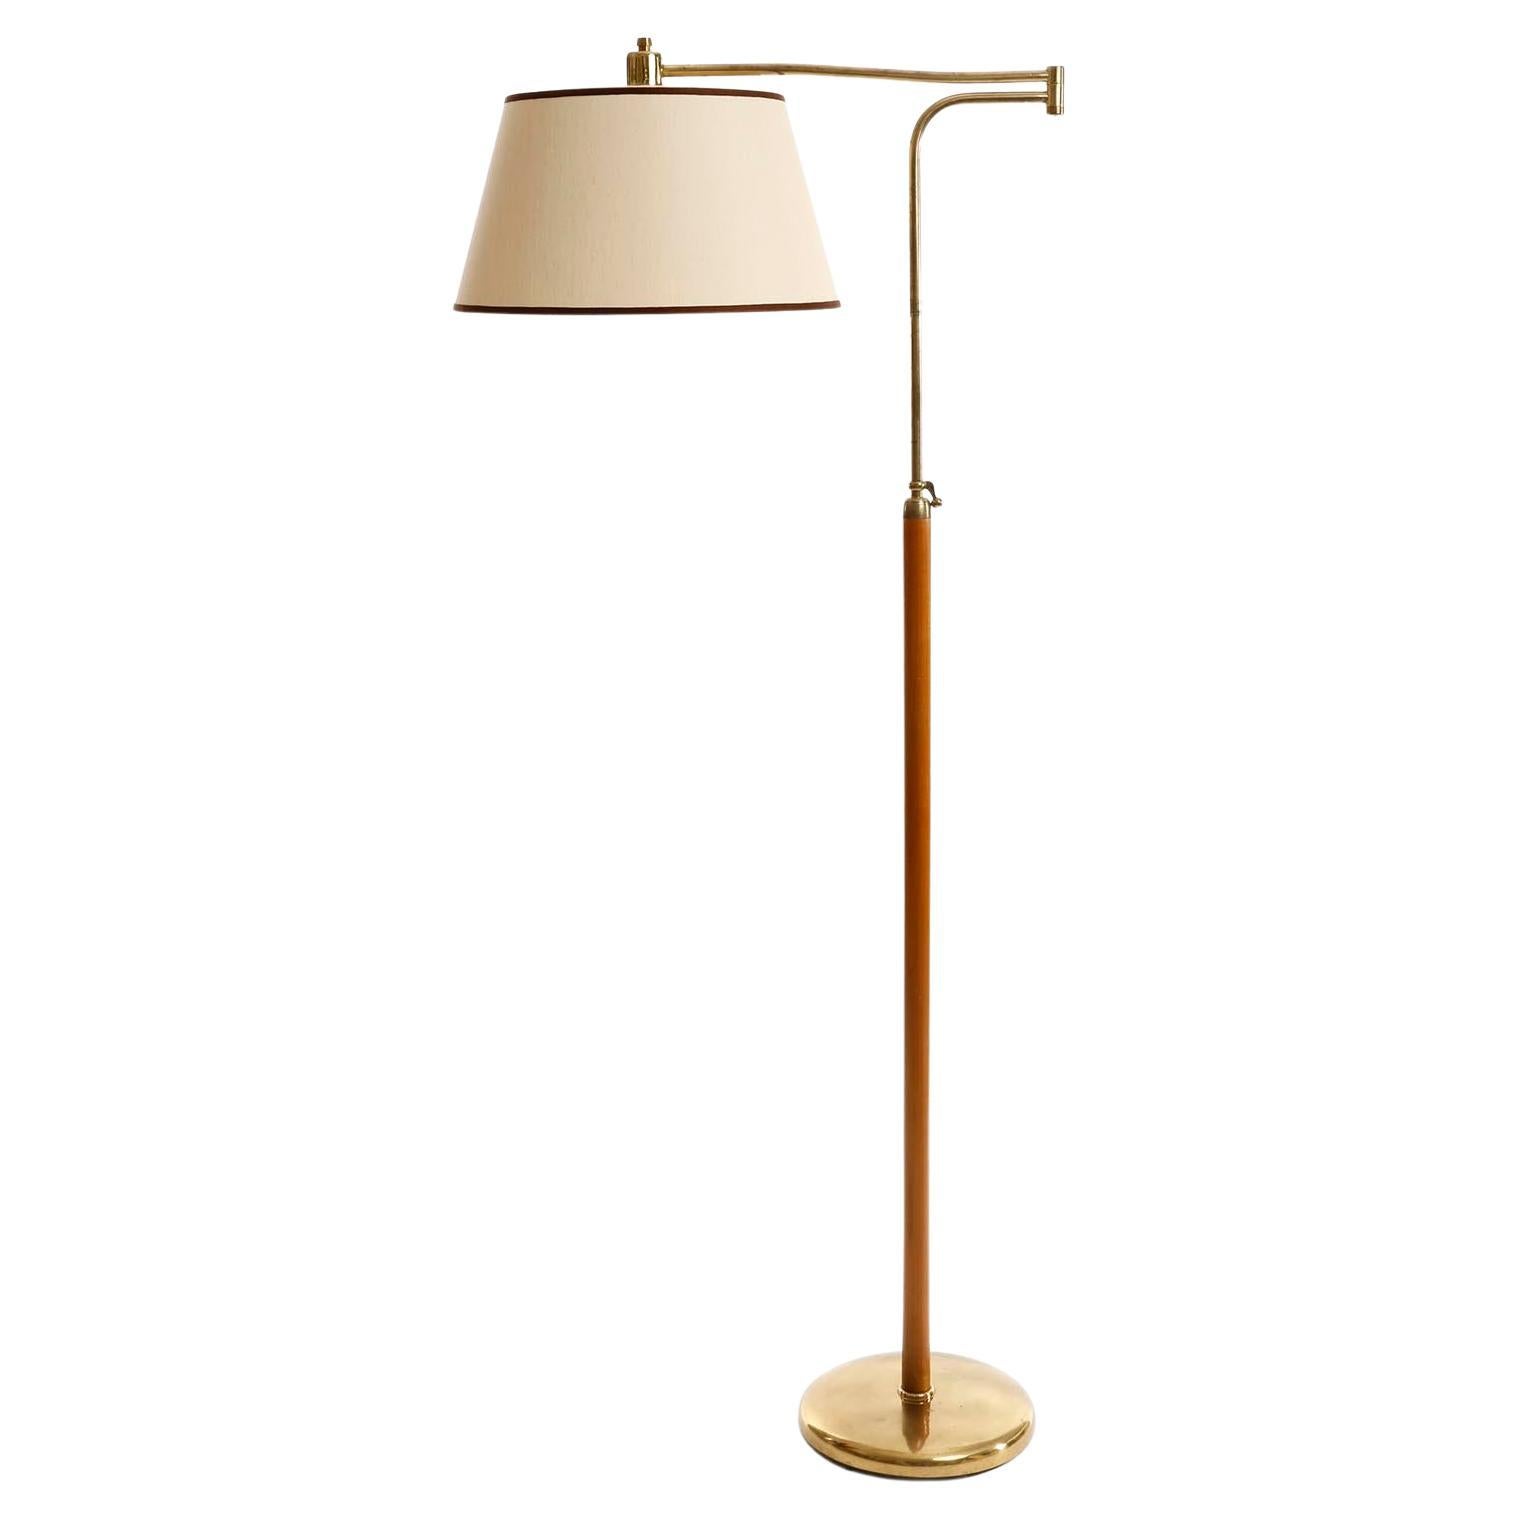 Josef Frank Adjustable Floor Lamp 'Neolift' by J.T. Kalmar, Brass Wood, 1950s For Sale